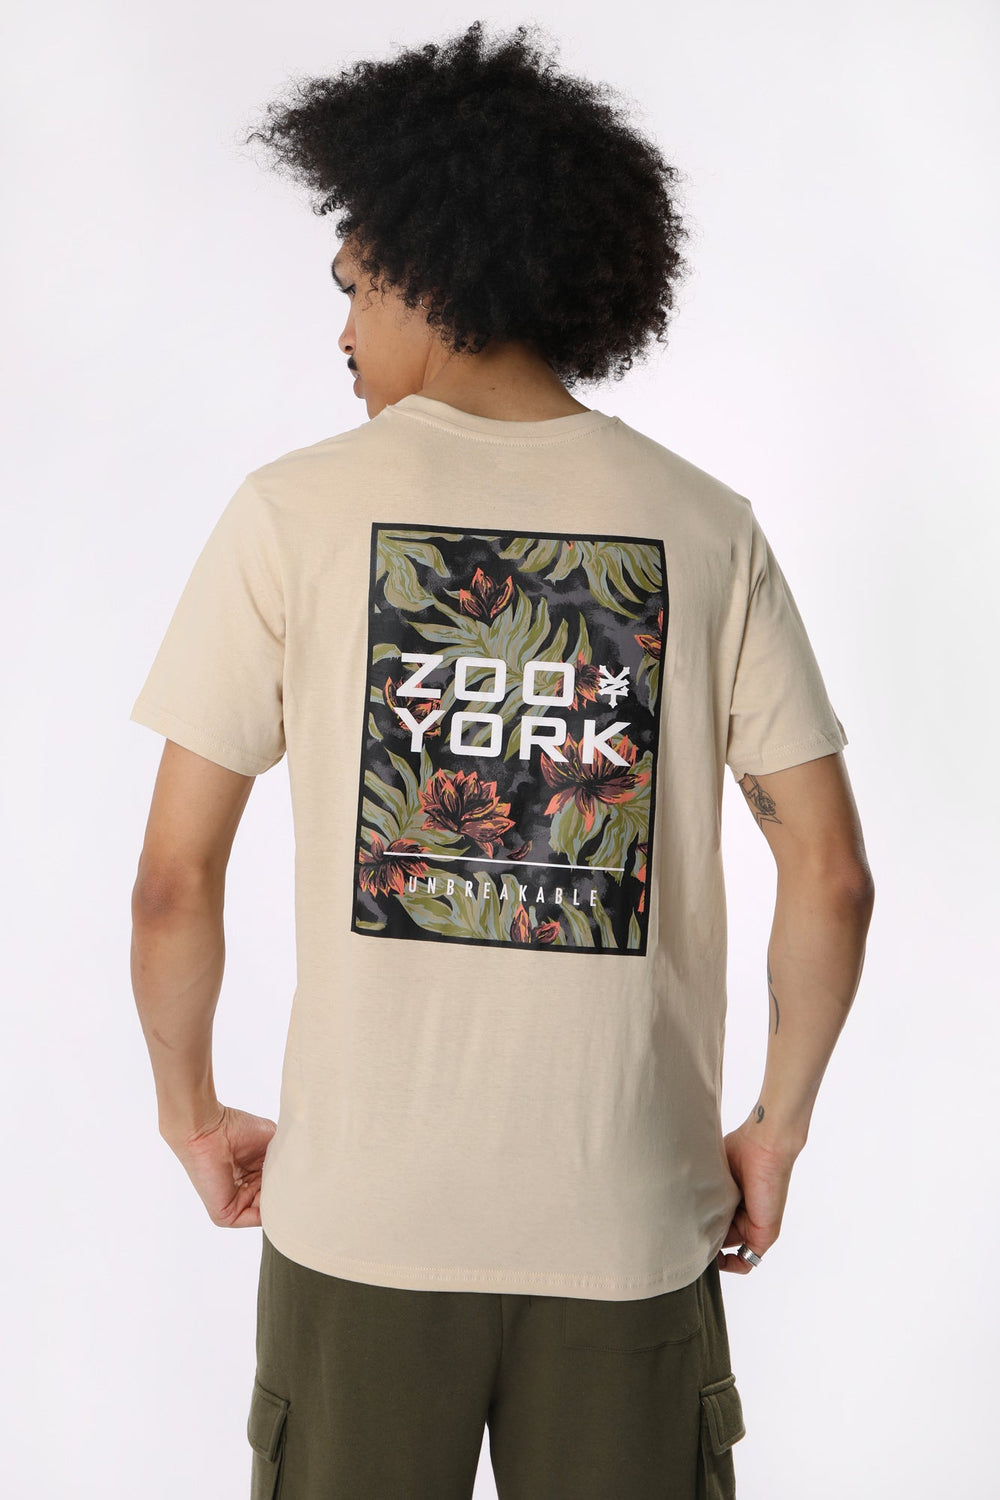 T-Shirt Imprimé Logo Tropical Zoo York Homme T-Shirt Imprimé Logo Tropical Zoo York Homme